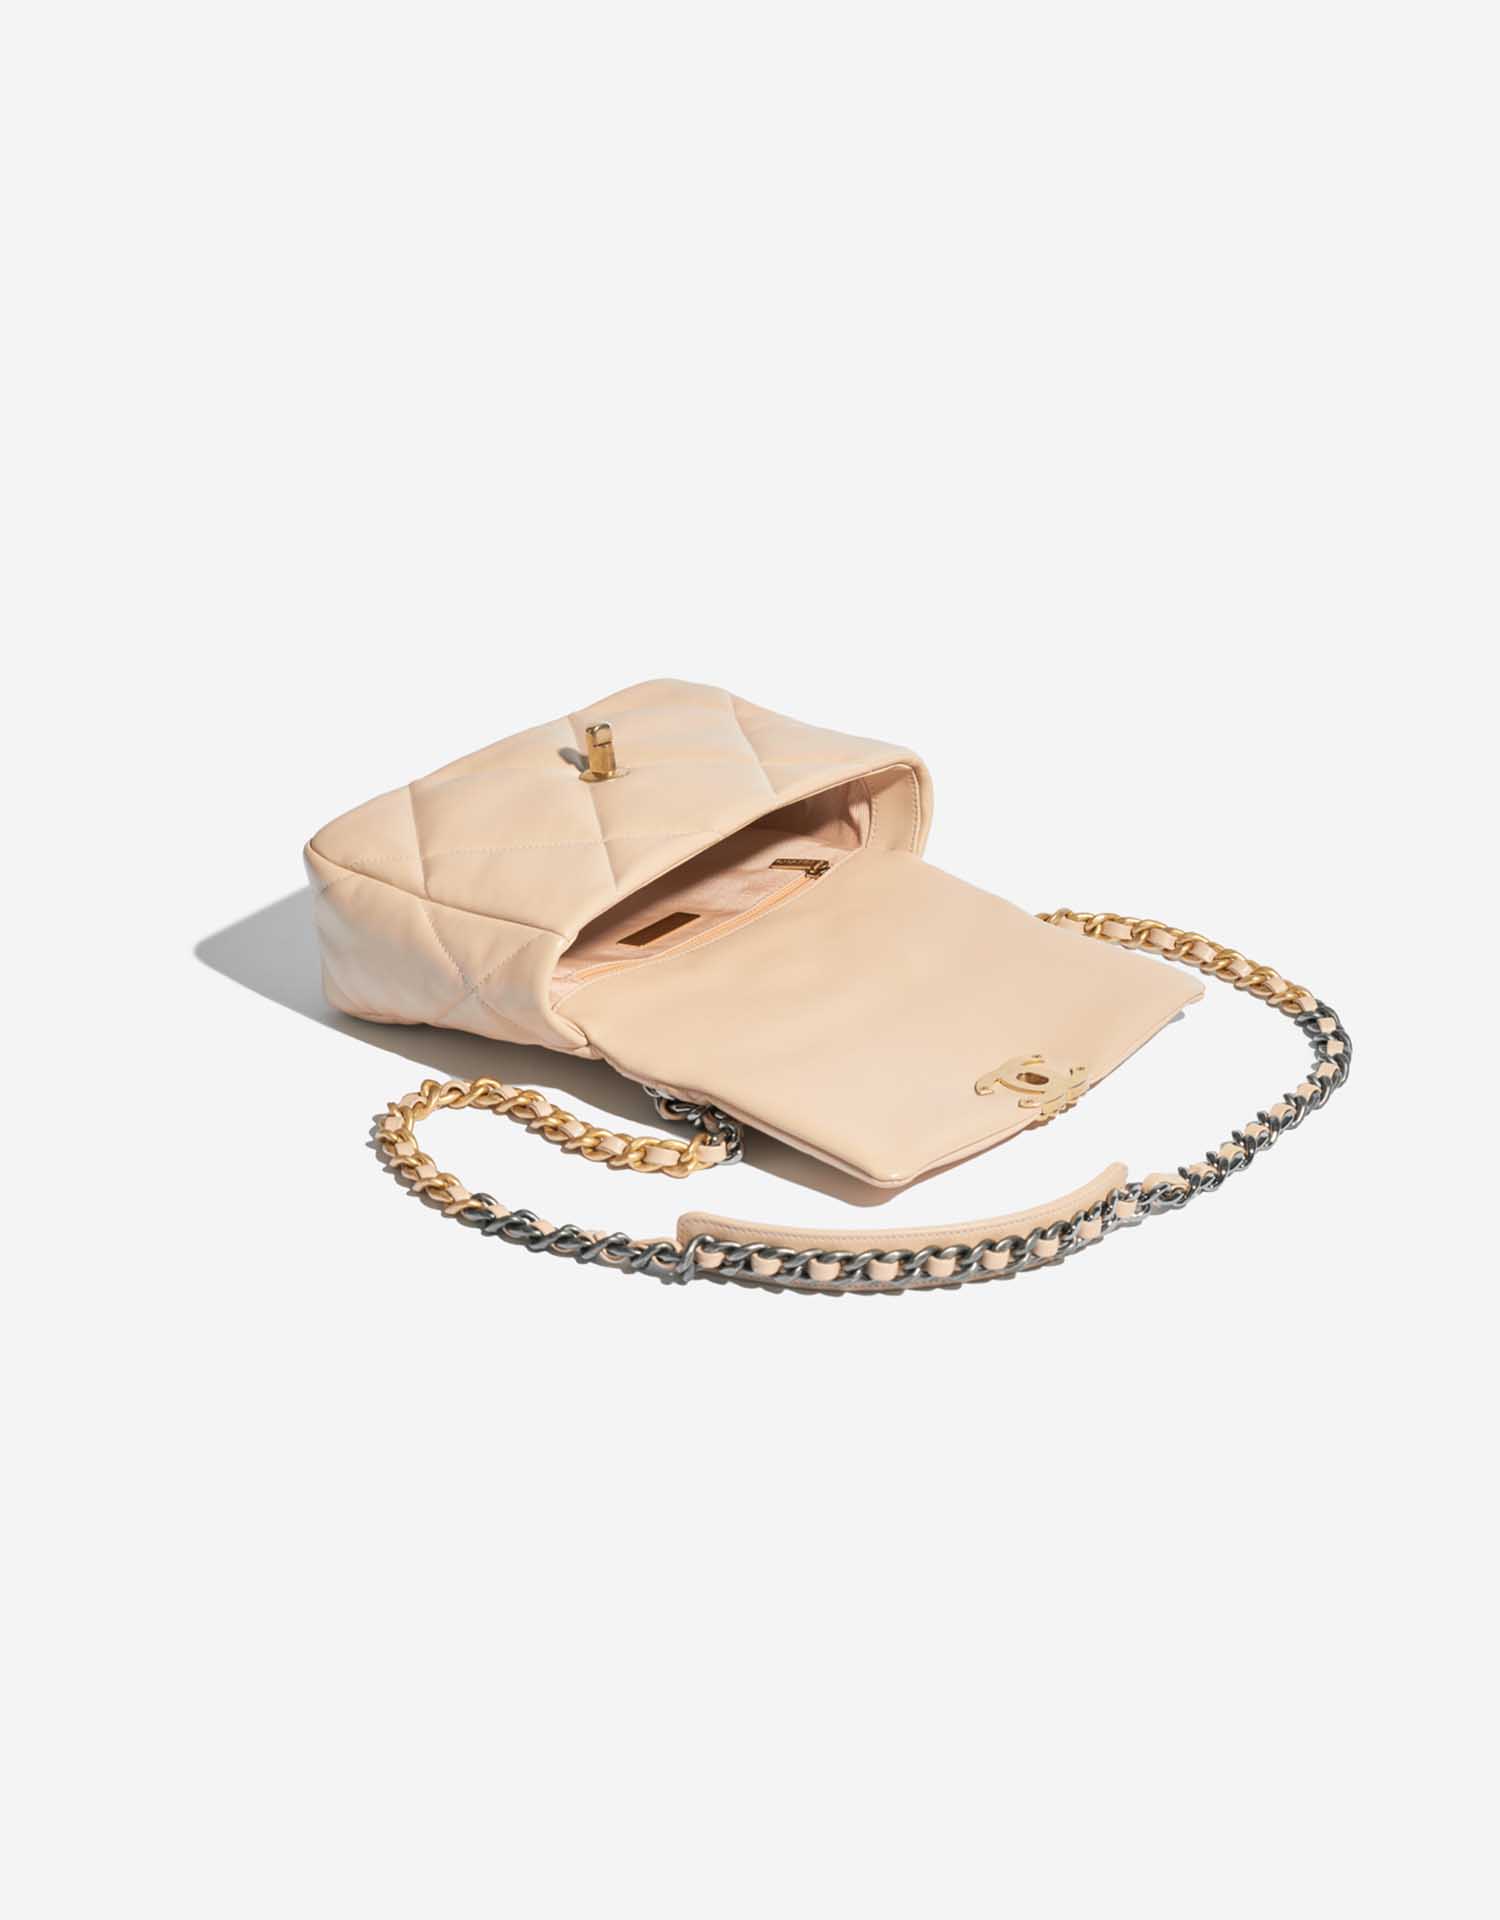 Chanel 19 Flap Bag Lamb Beige | SACLÀB